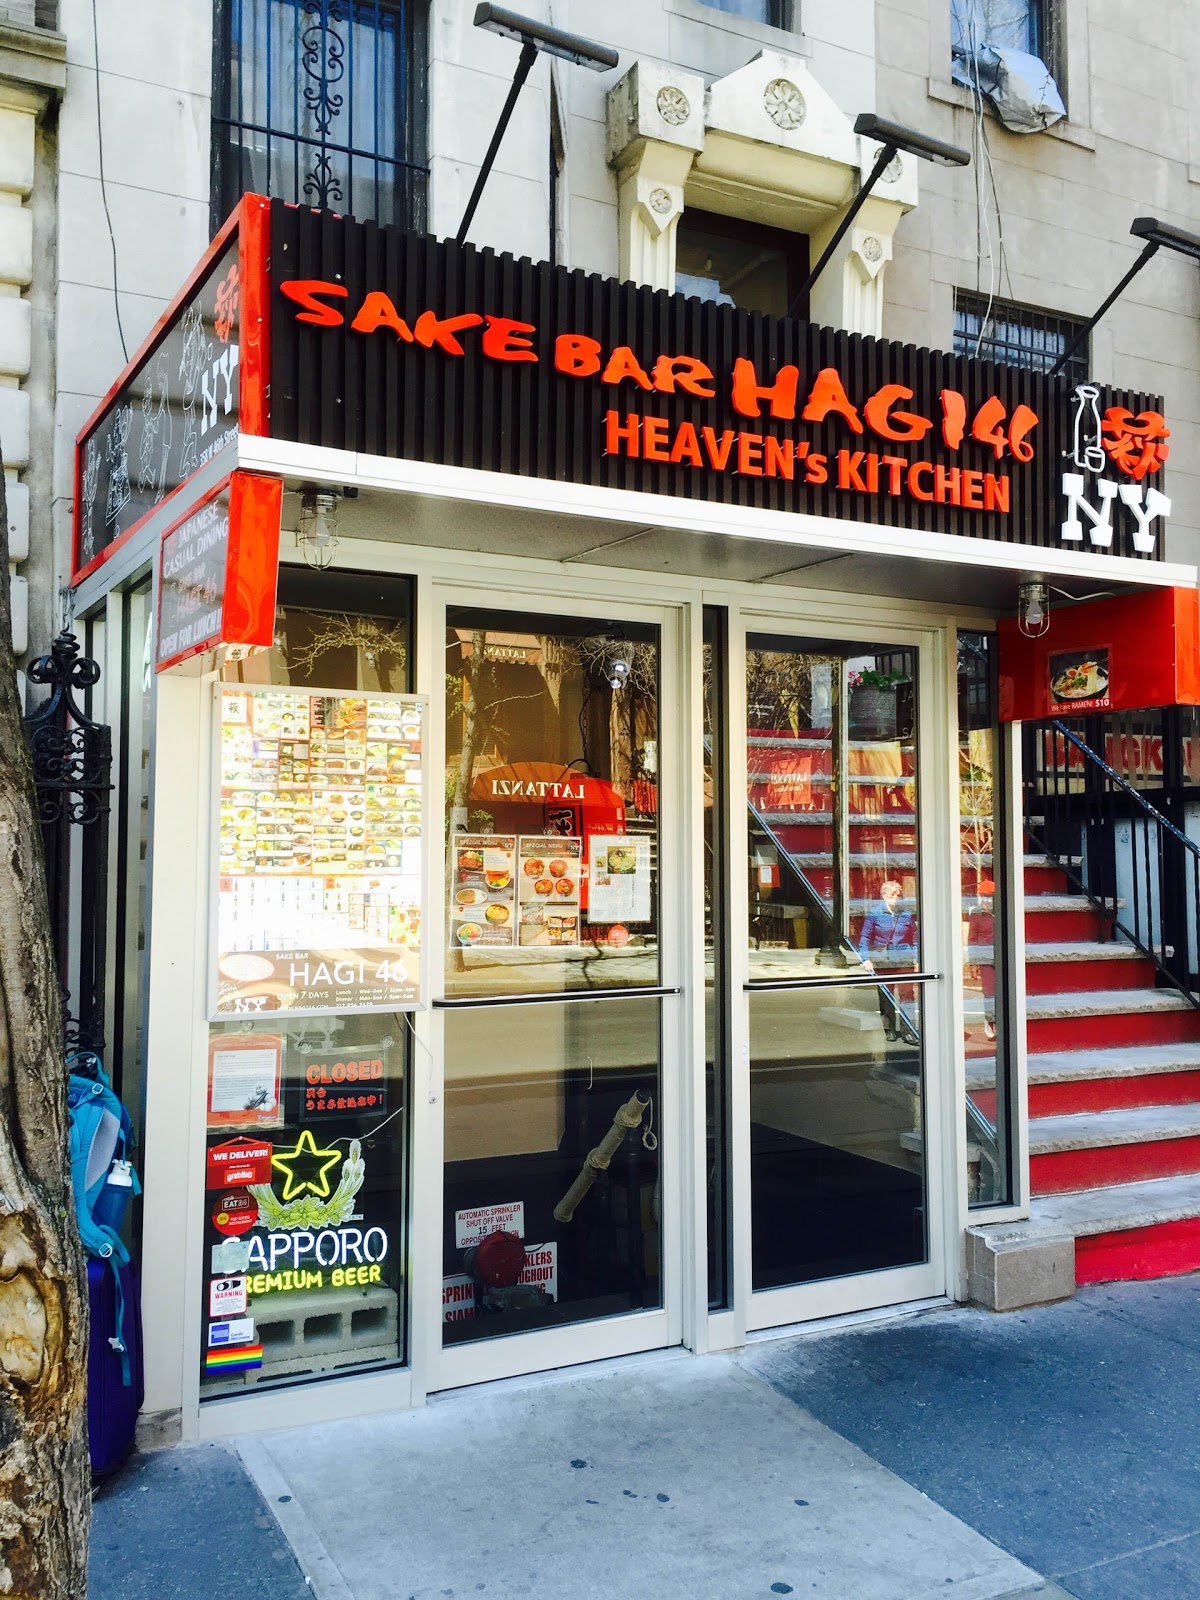 Photo of Sake Bar Hagi 46 in New York City, New York, United States - 2 Picture of Restaurant, Food, Point of interest, Establishment